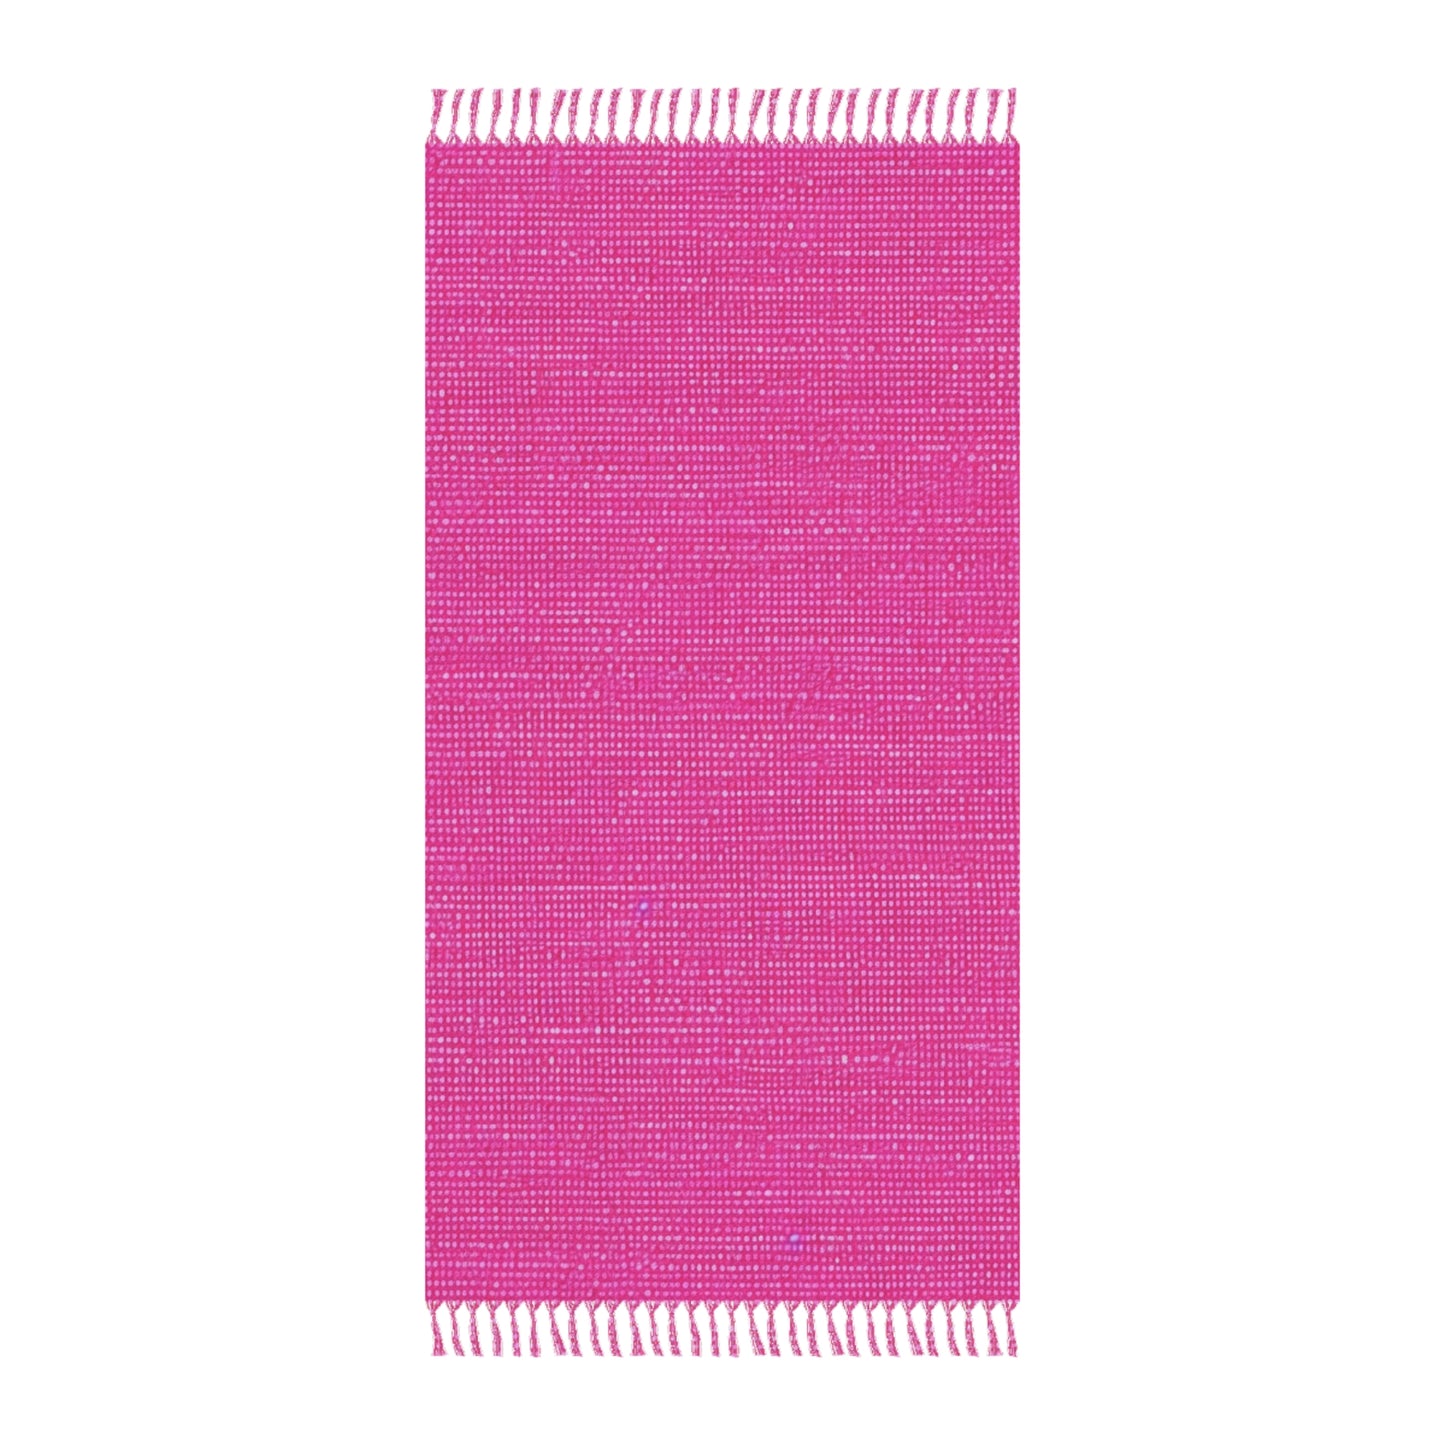 Hot Neon Pink Doll Like: Denim-Inspired, Bold & Bright Fabric - Boho Beach Cloth